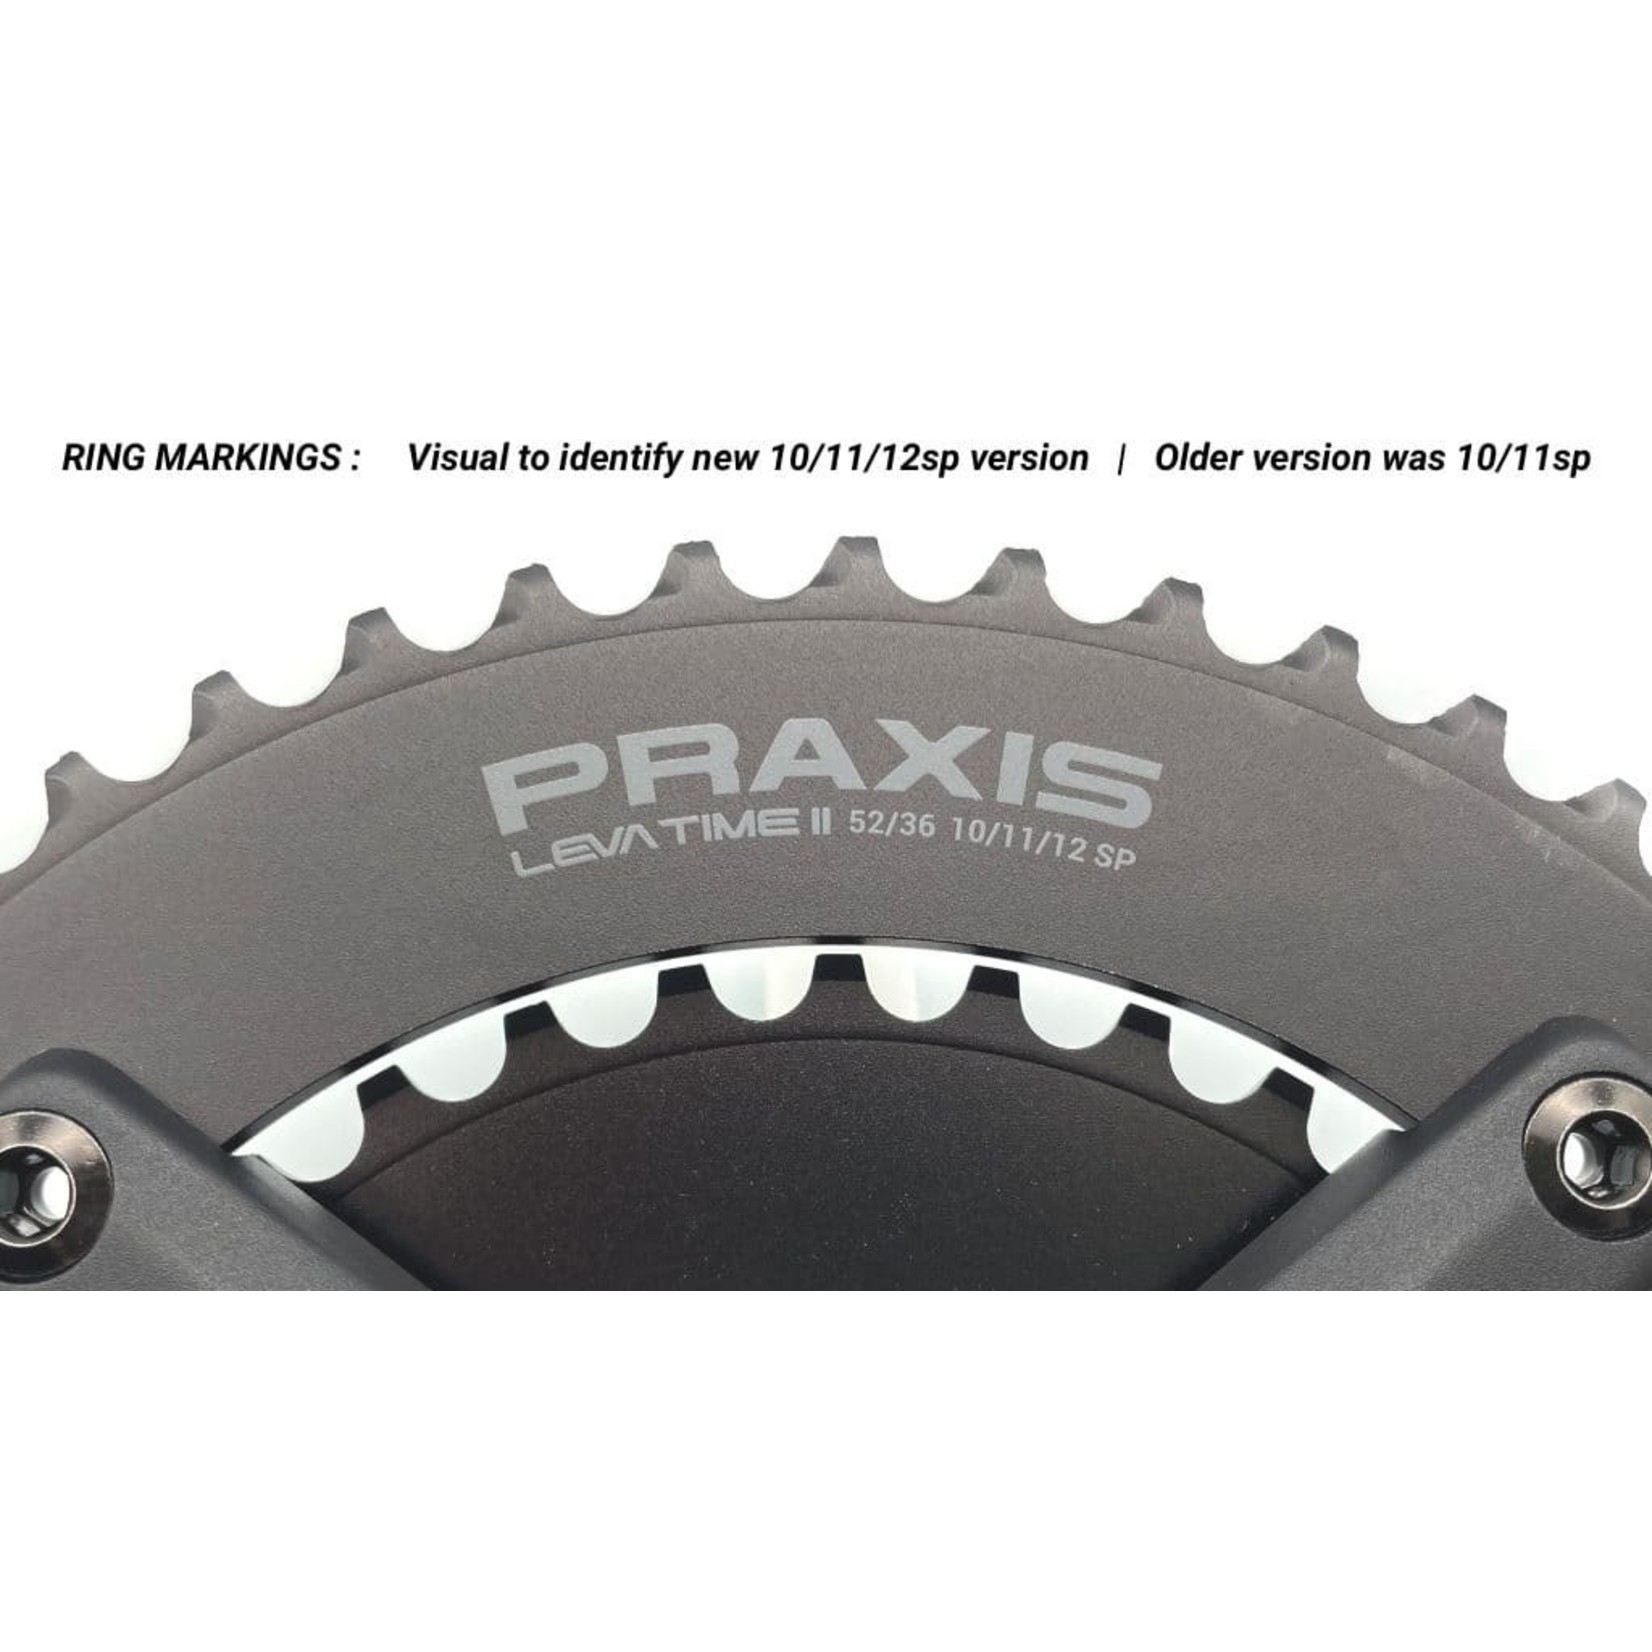 Praxis Praxis Road cranks - Alba - Alloy,172.5mm DM40T